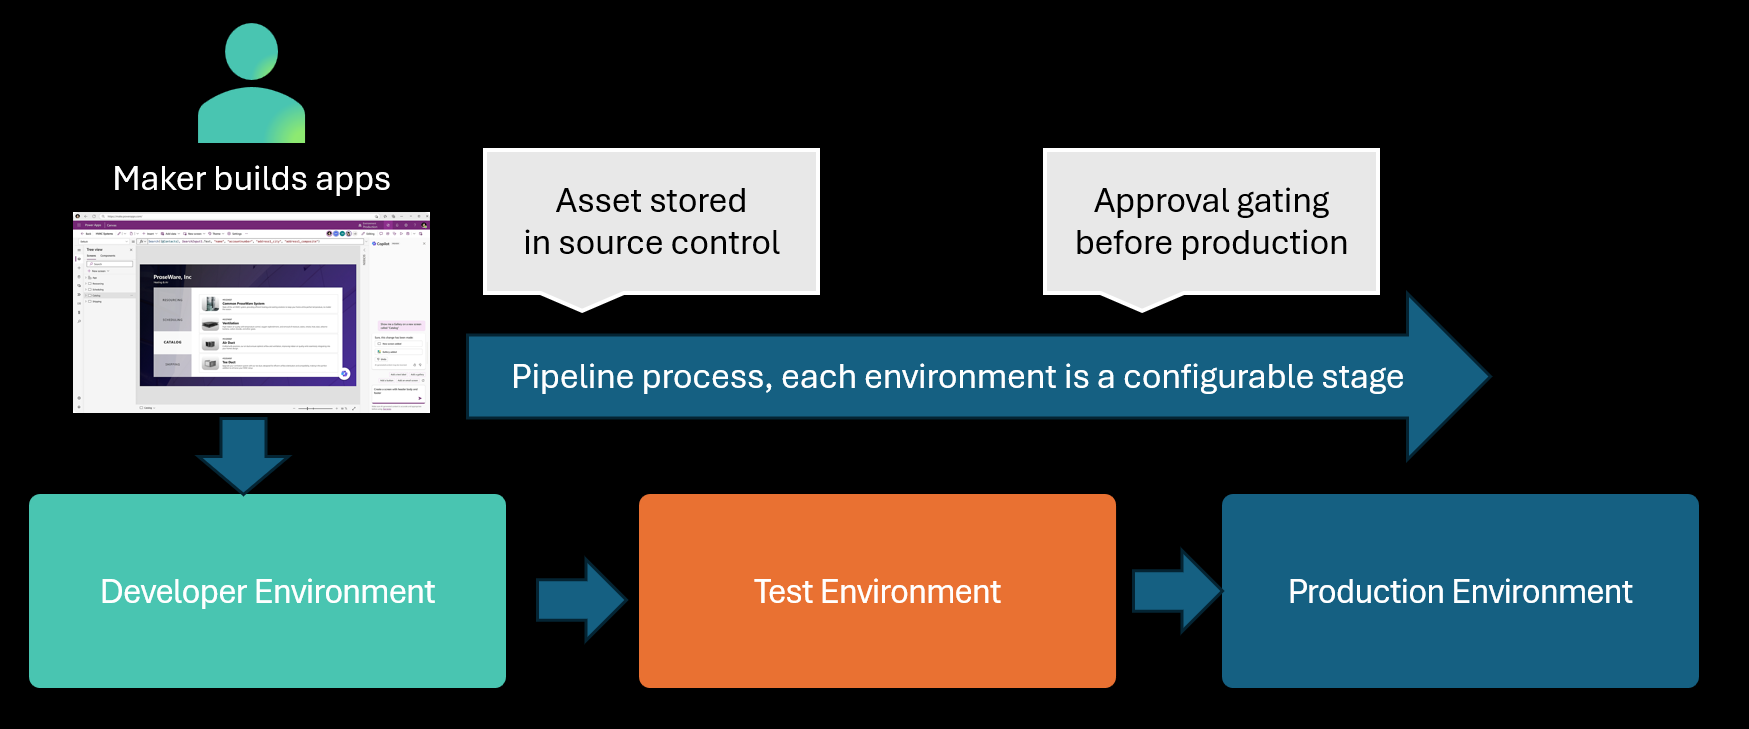 Диаграмма, иллюстрирующая конвейер для автоматизации продвижения актива, хранящегося в системе управления версиями — от разработки через тестирование до производства